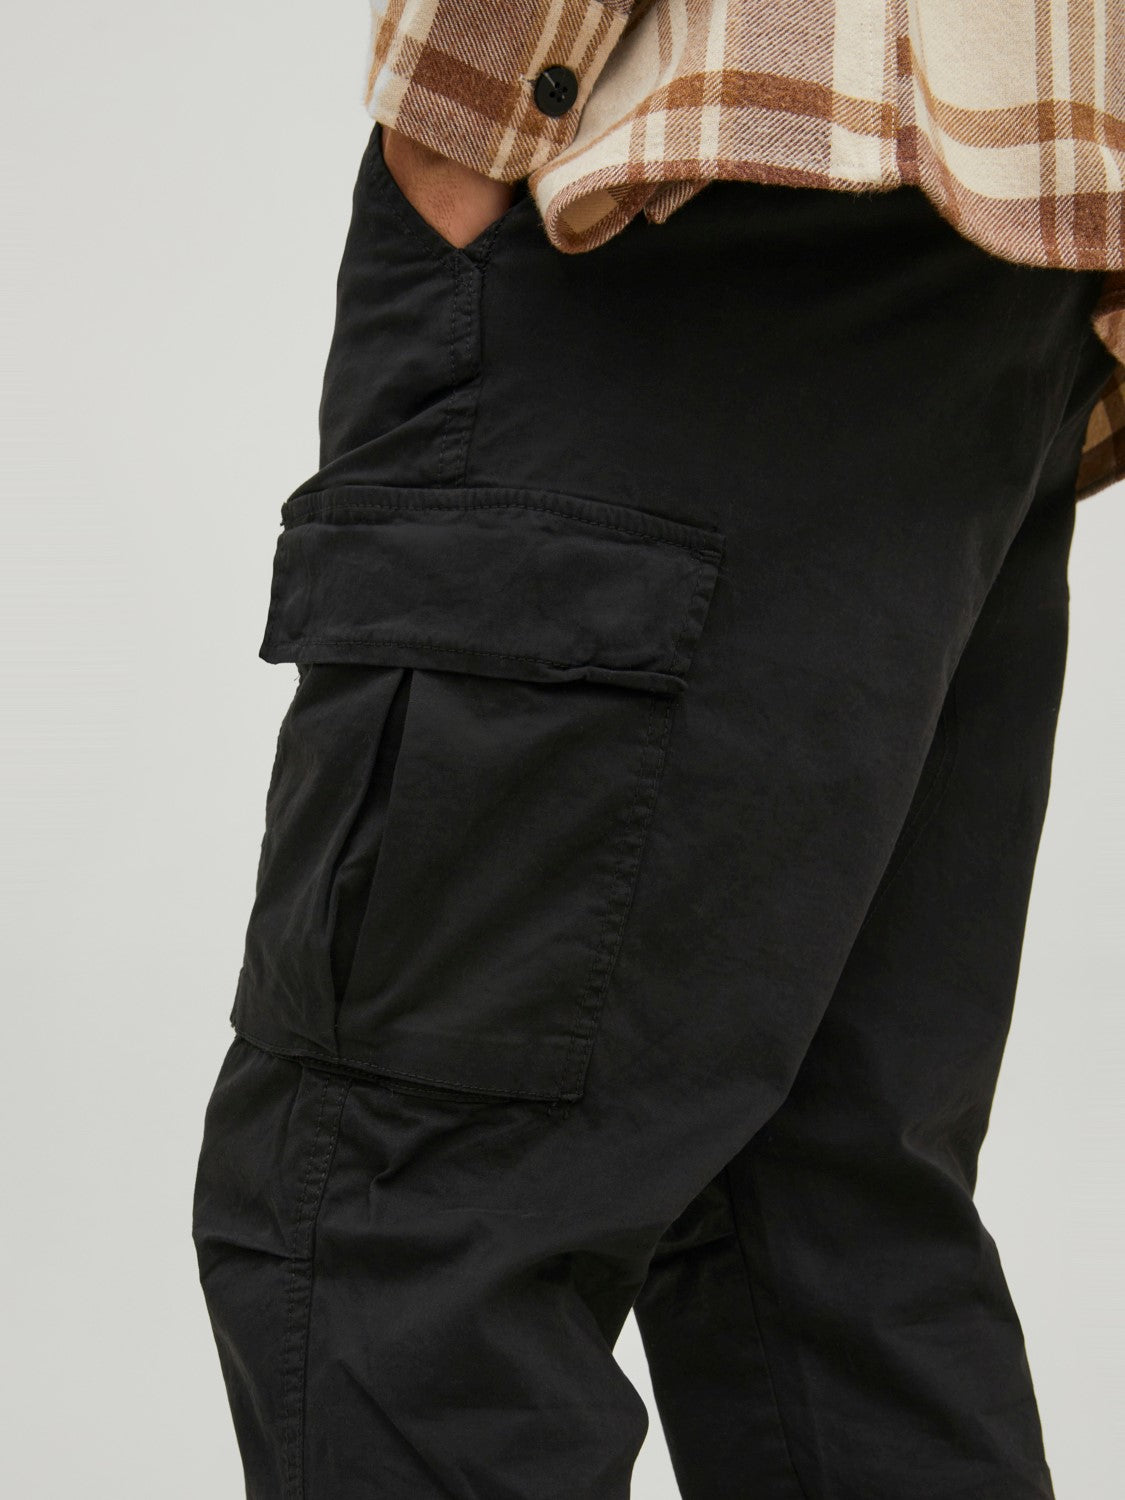 Ace Tucker Black Cargo Pants-Side pocket view